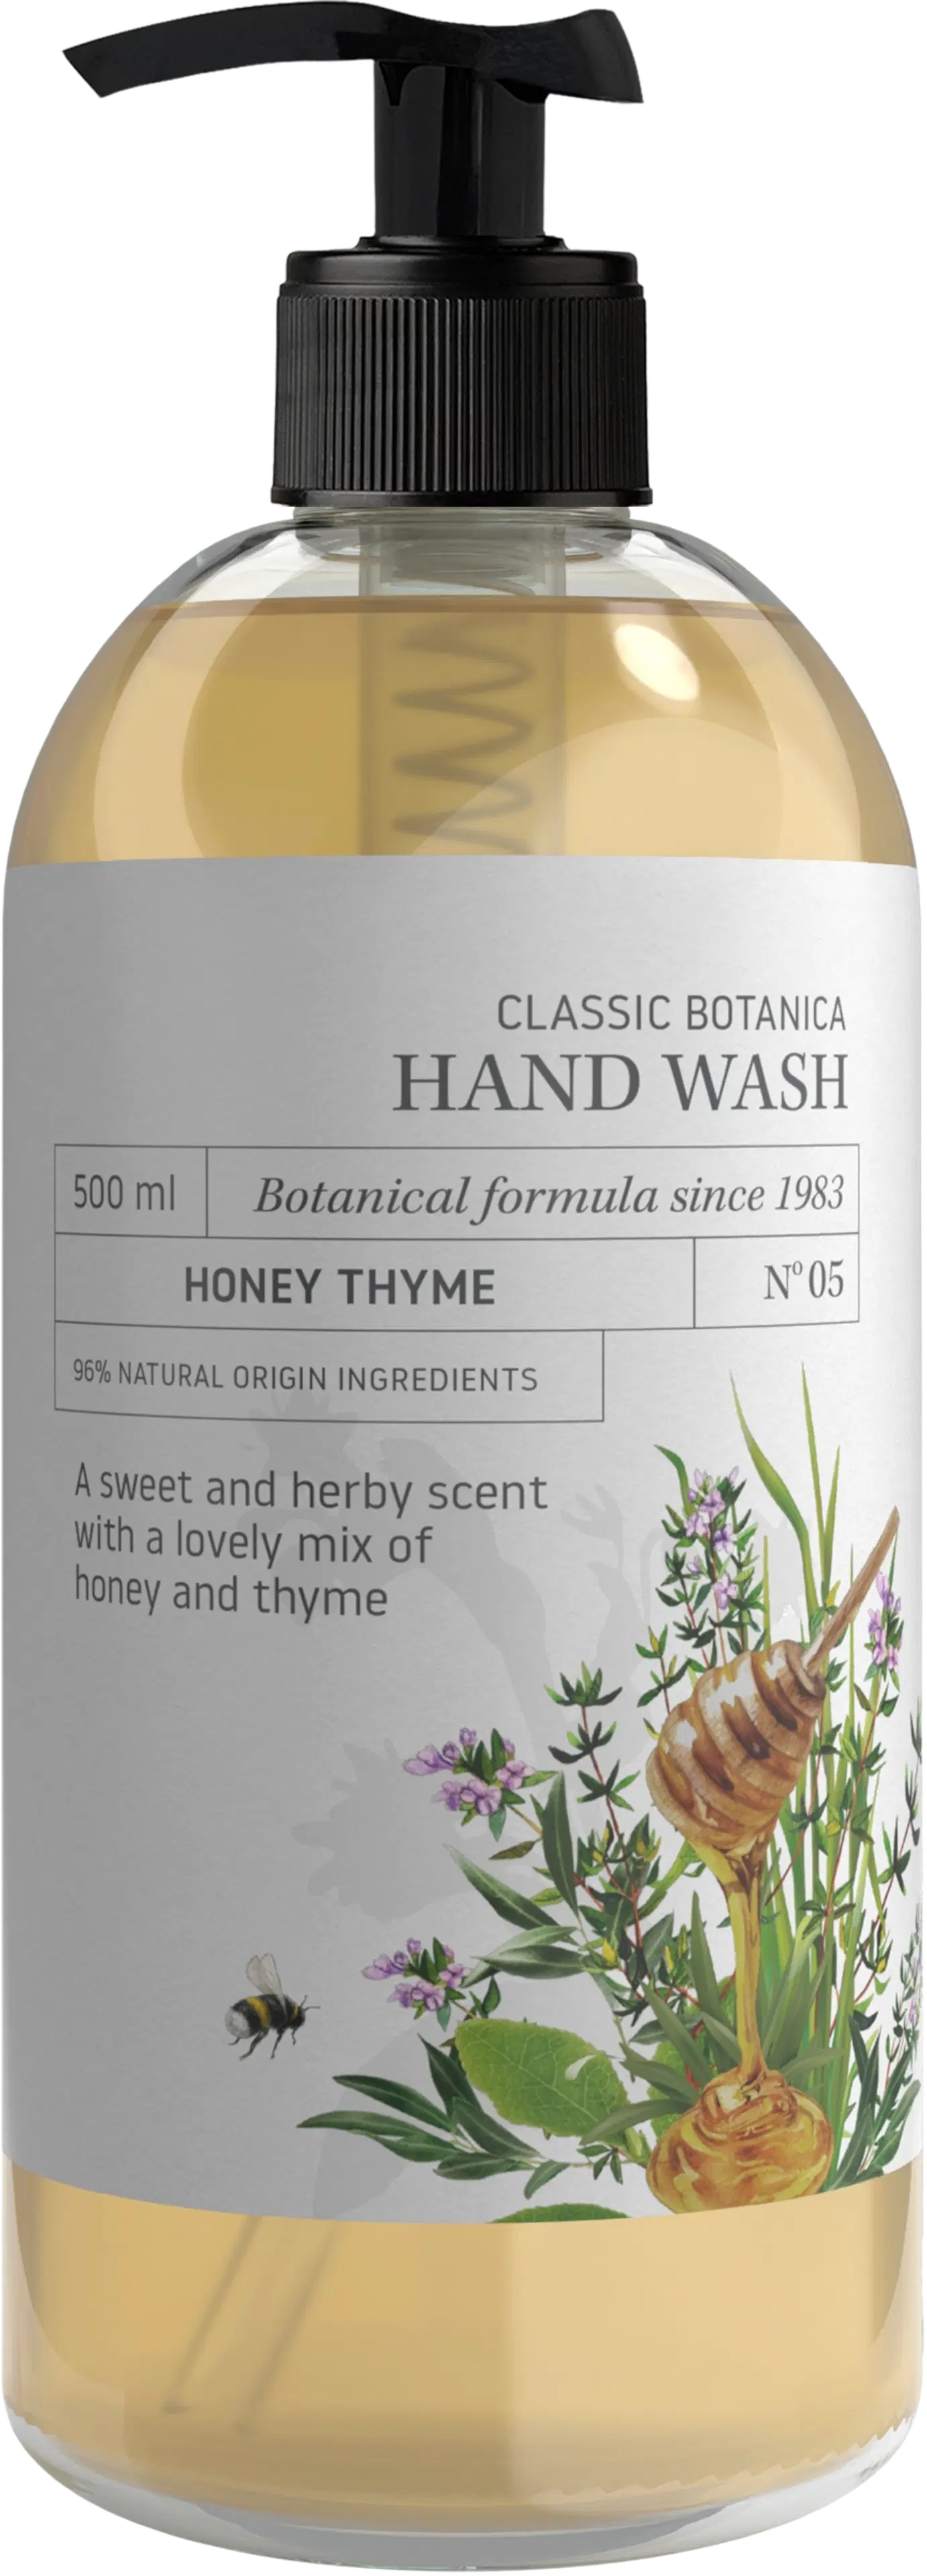 Classic Botanica Honey Thyme käsisaippua 500ml